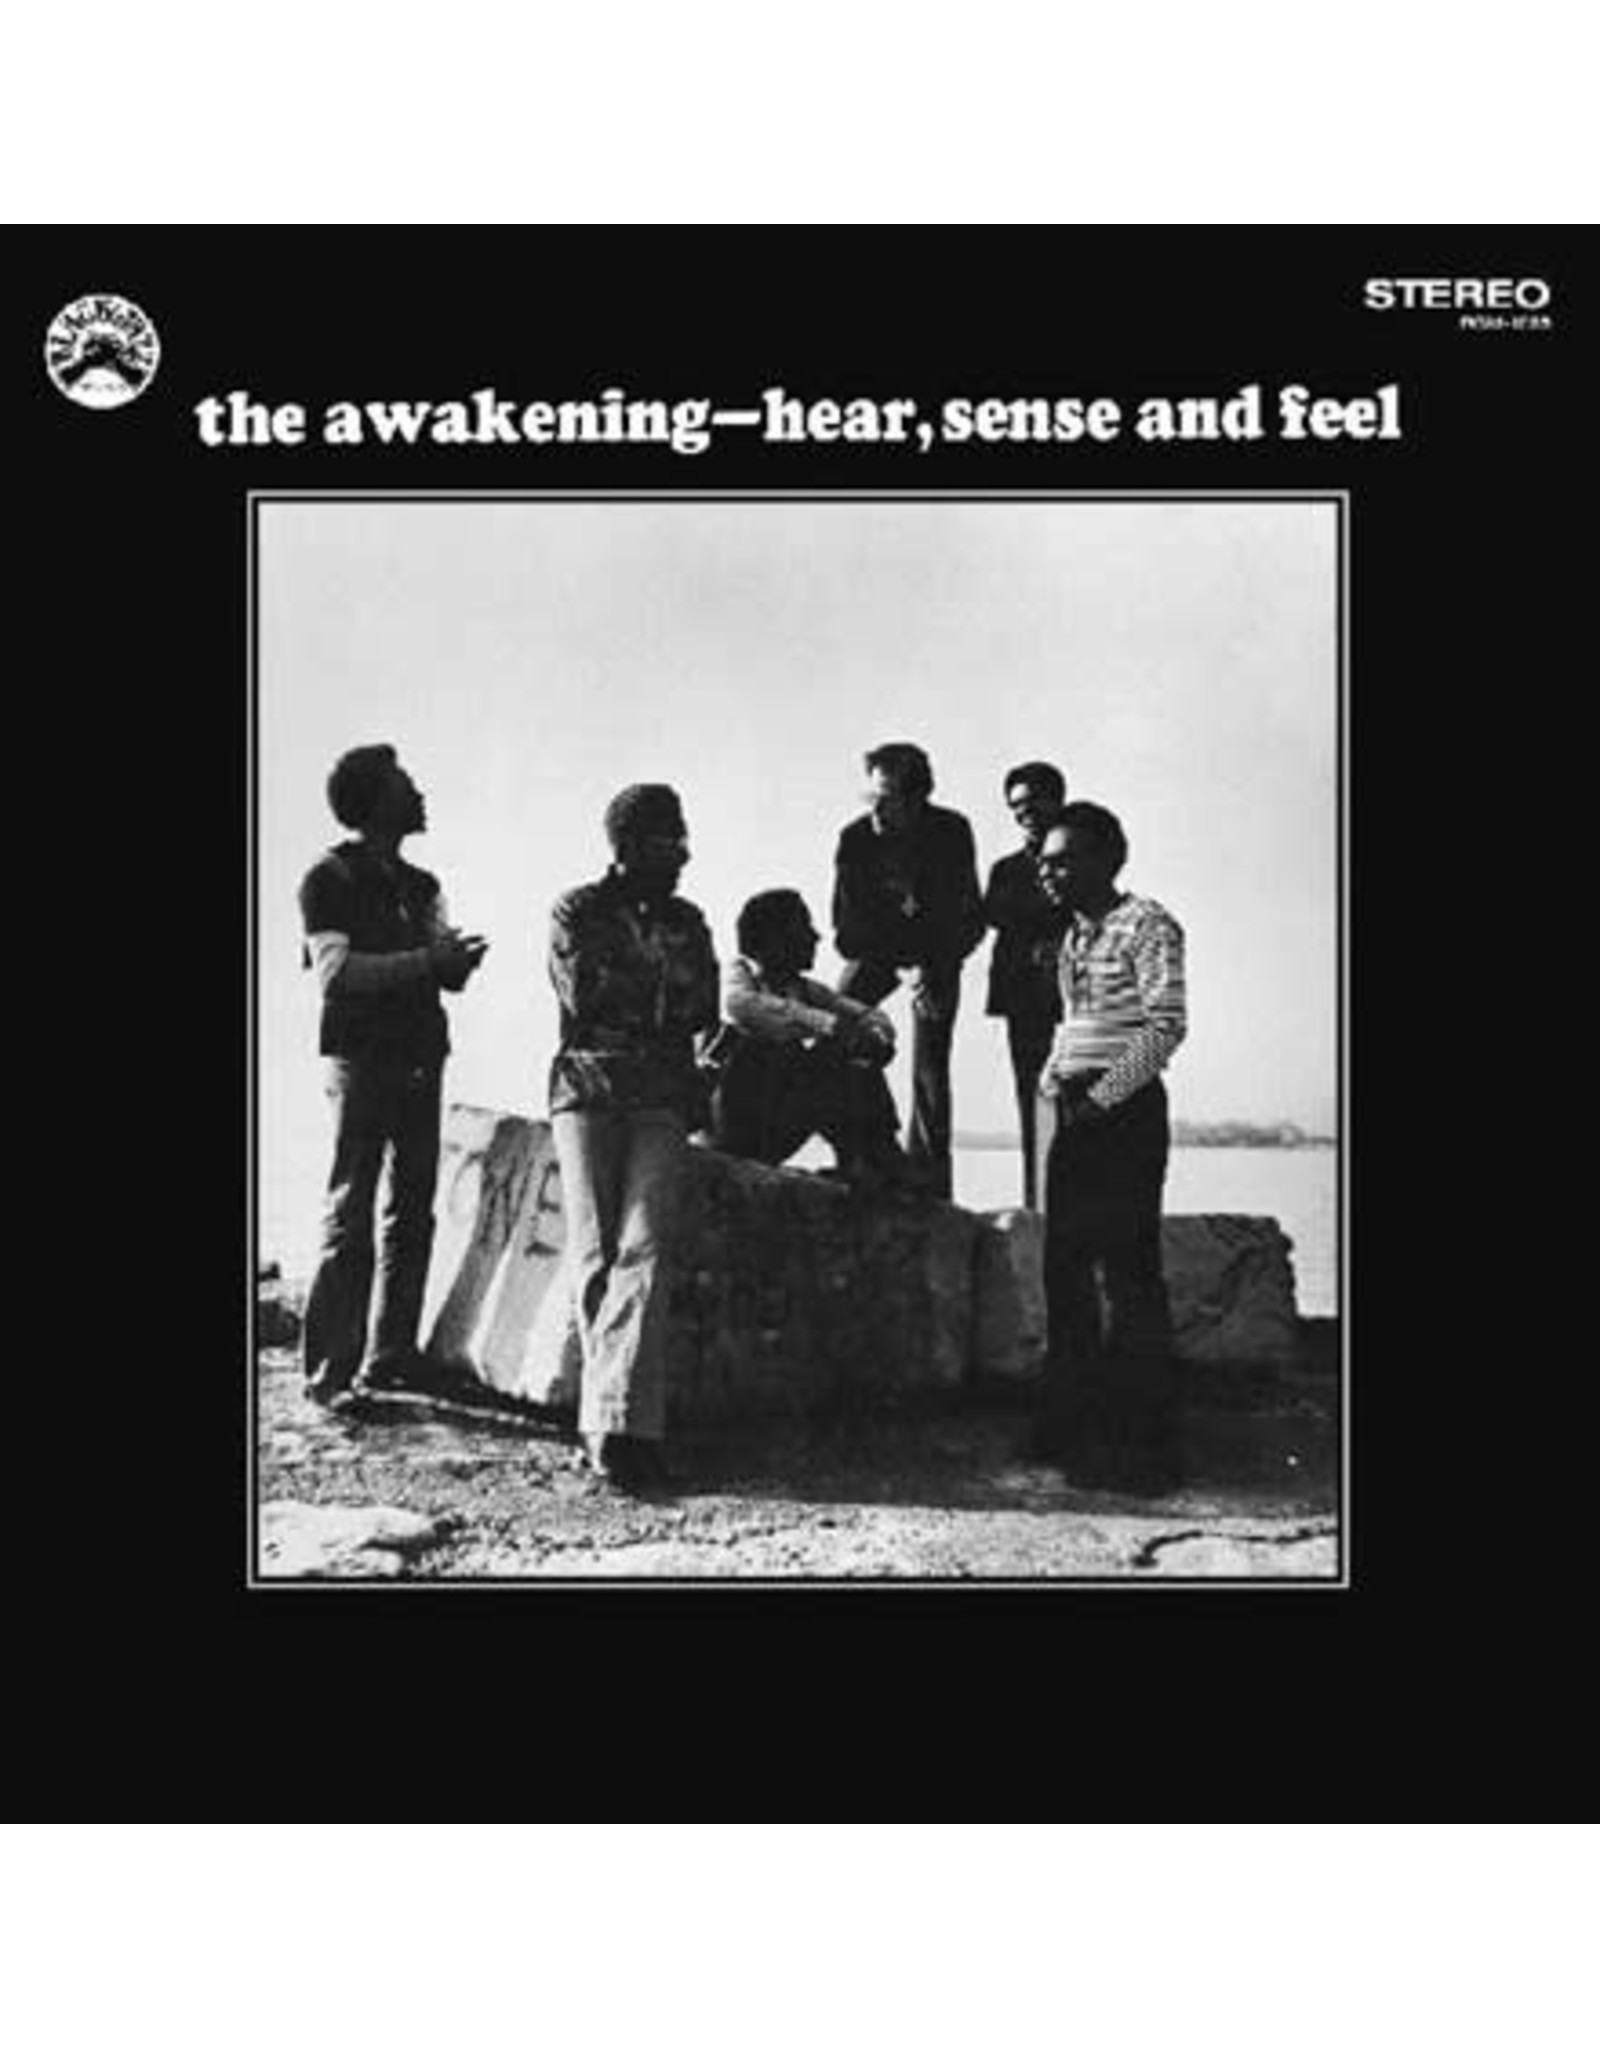 Real Gone Awakening, The - Hear, Sense and Feel  LP